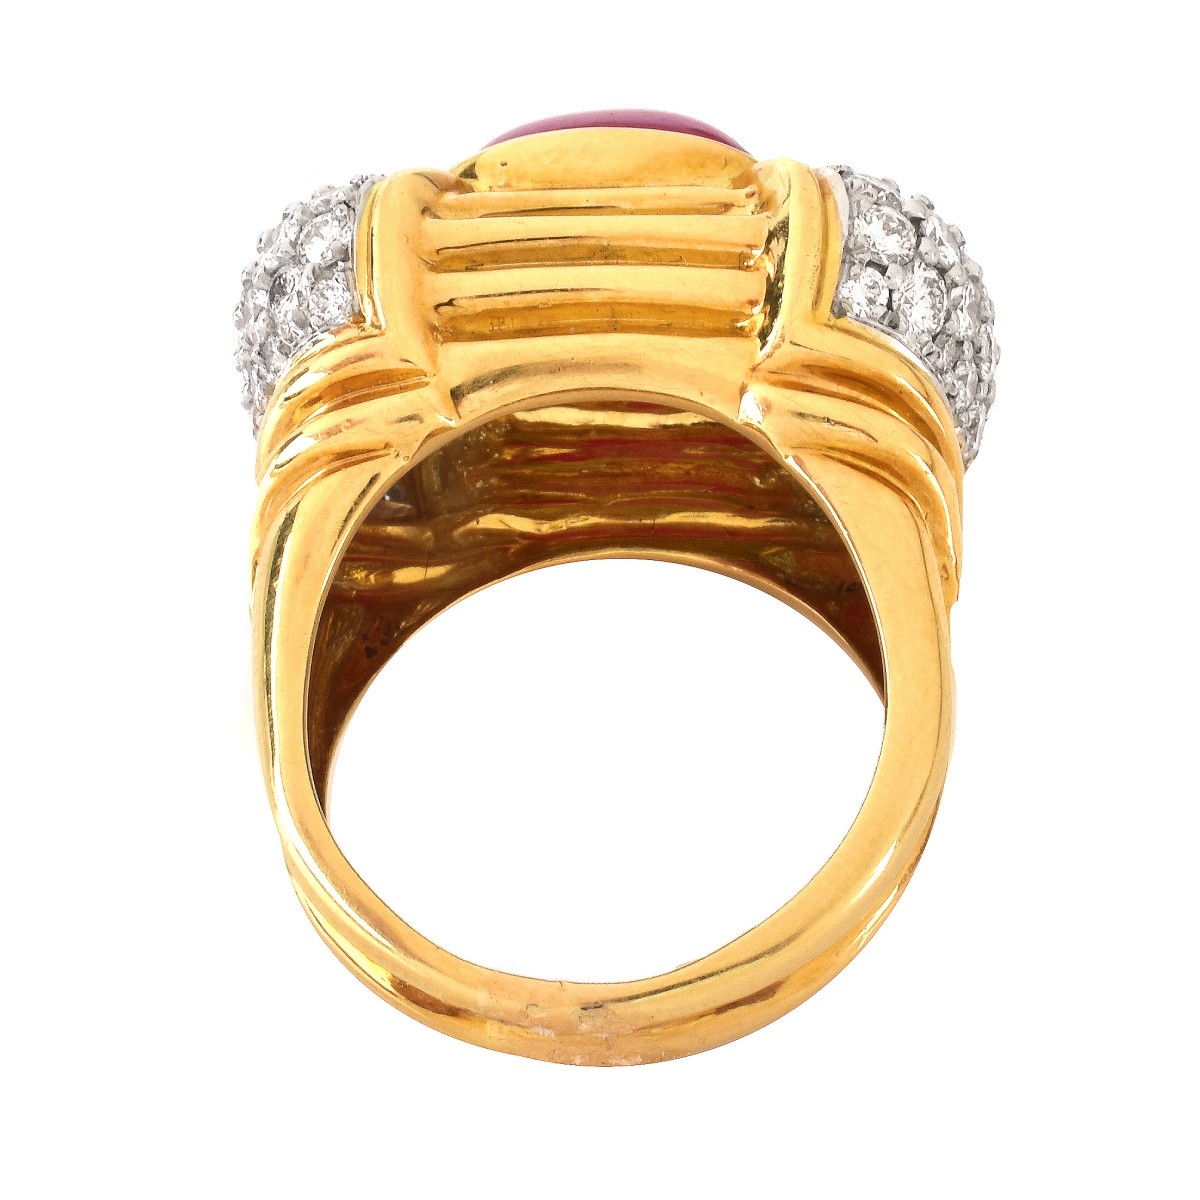 Burma Ruby, Diamond and 18K Gold Ring